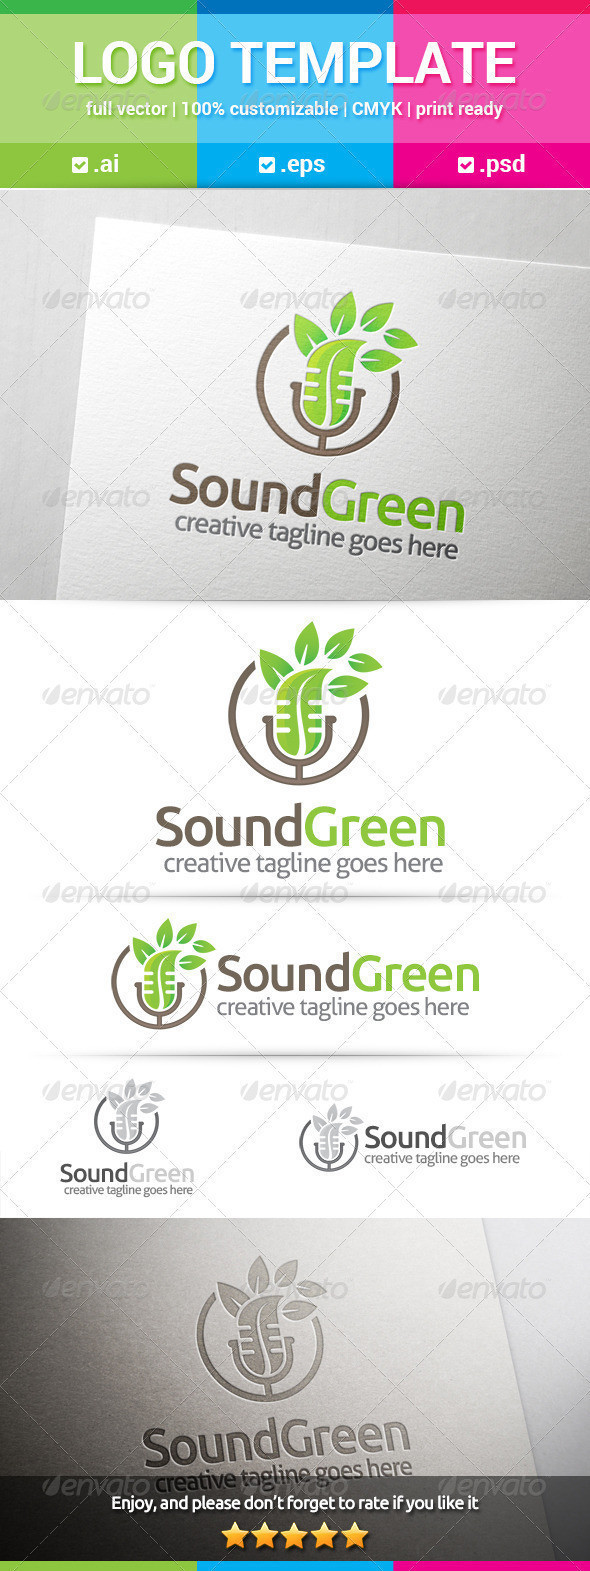 Soundgreen